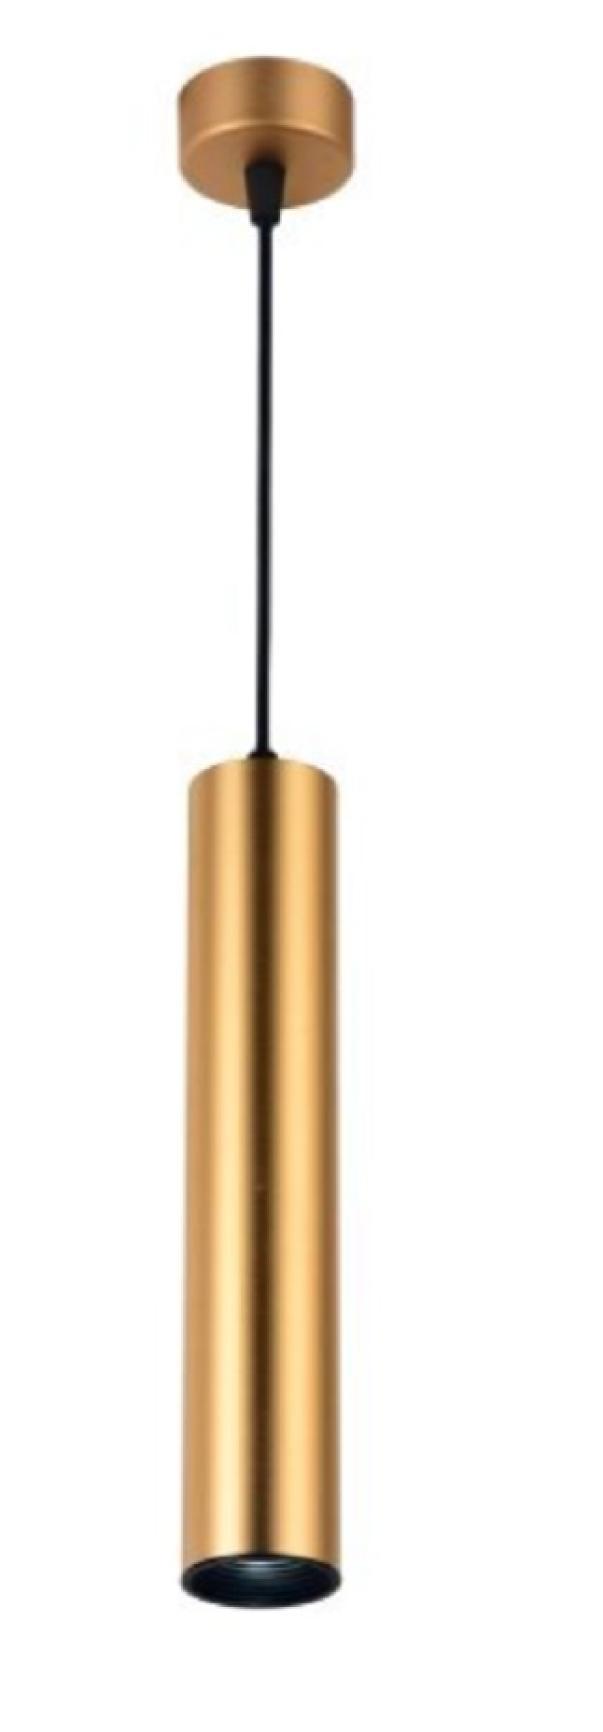 optonica led optonica led lampada sospensione hanging fixture gu10 aluminium gold body 5.5x30cm 9064